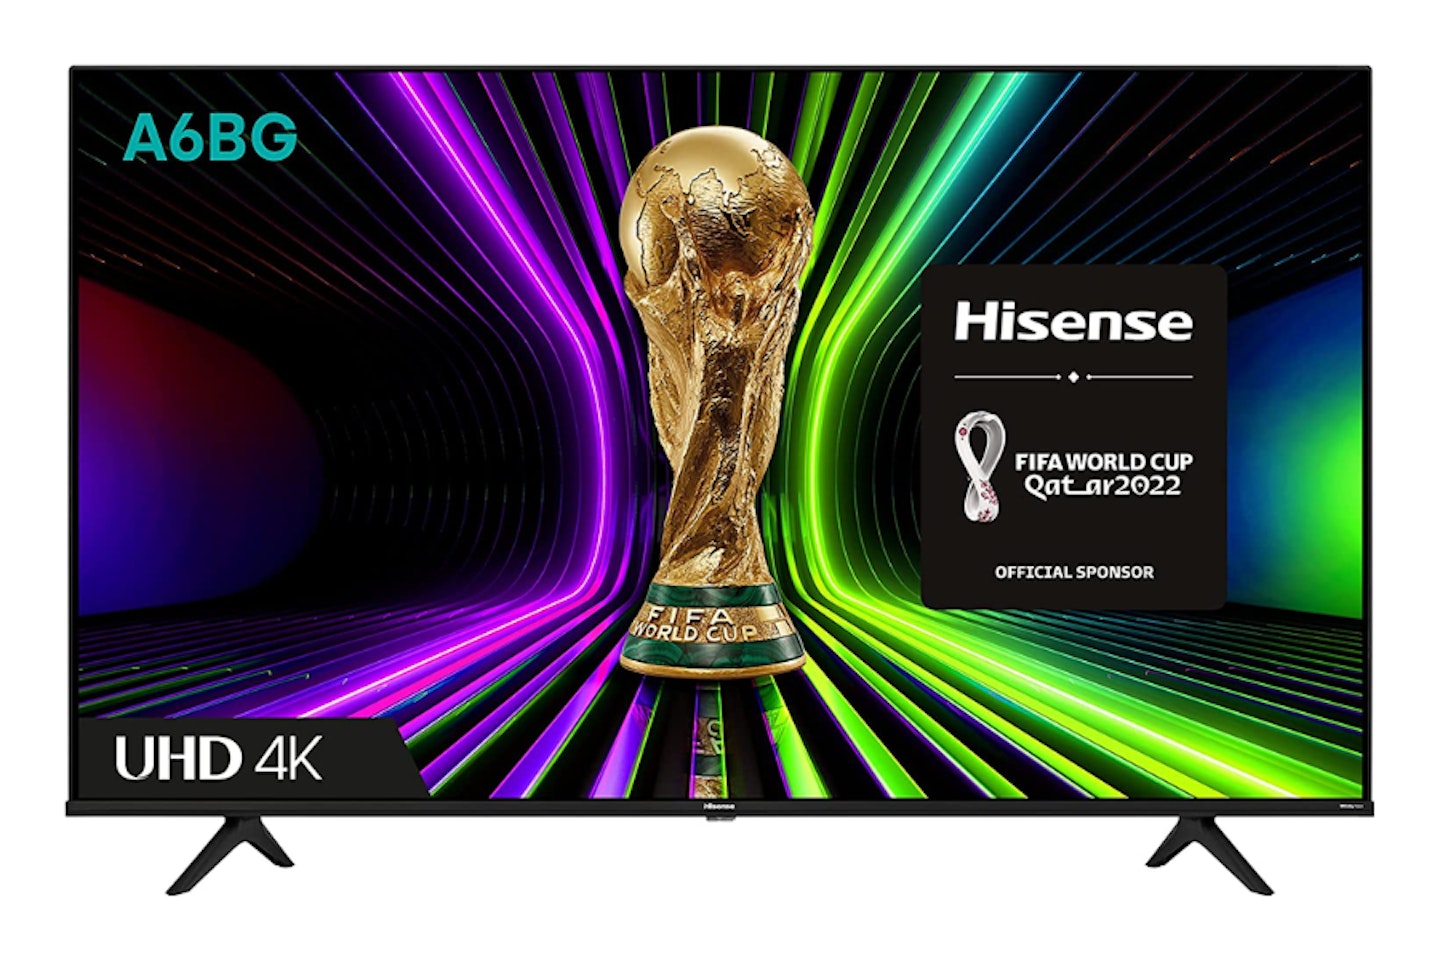 Hisense 55A6BGTUK 55-Inch 4K UHD Smart TV